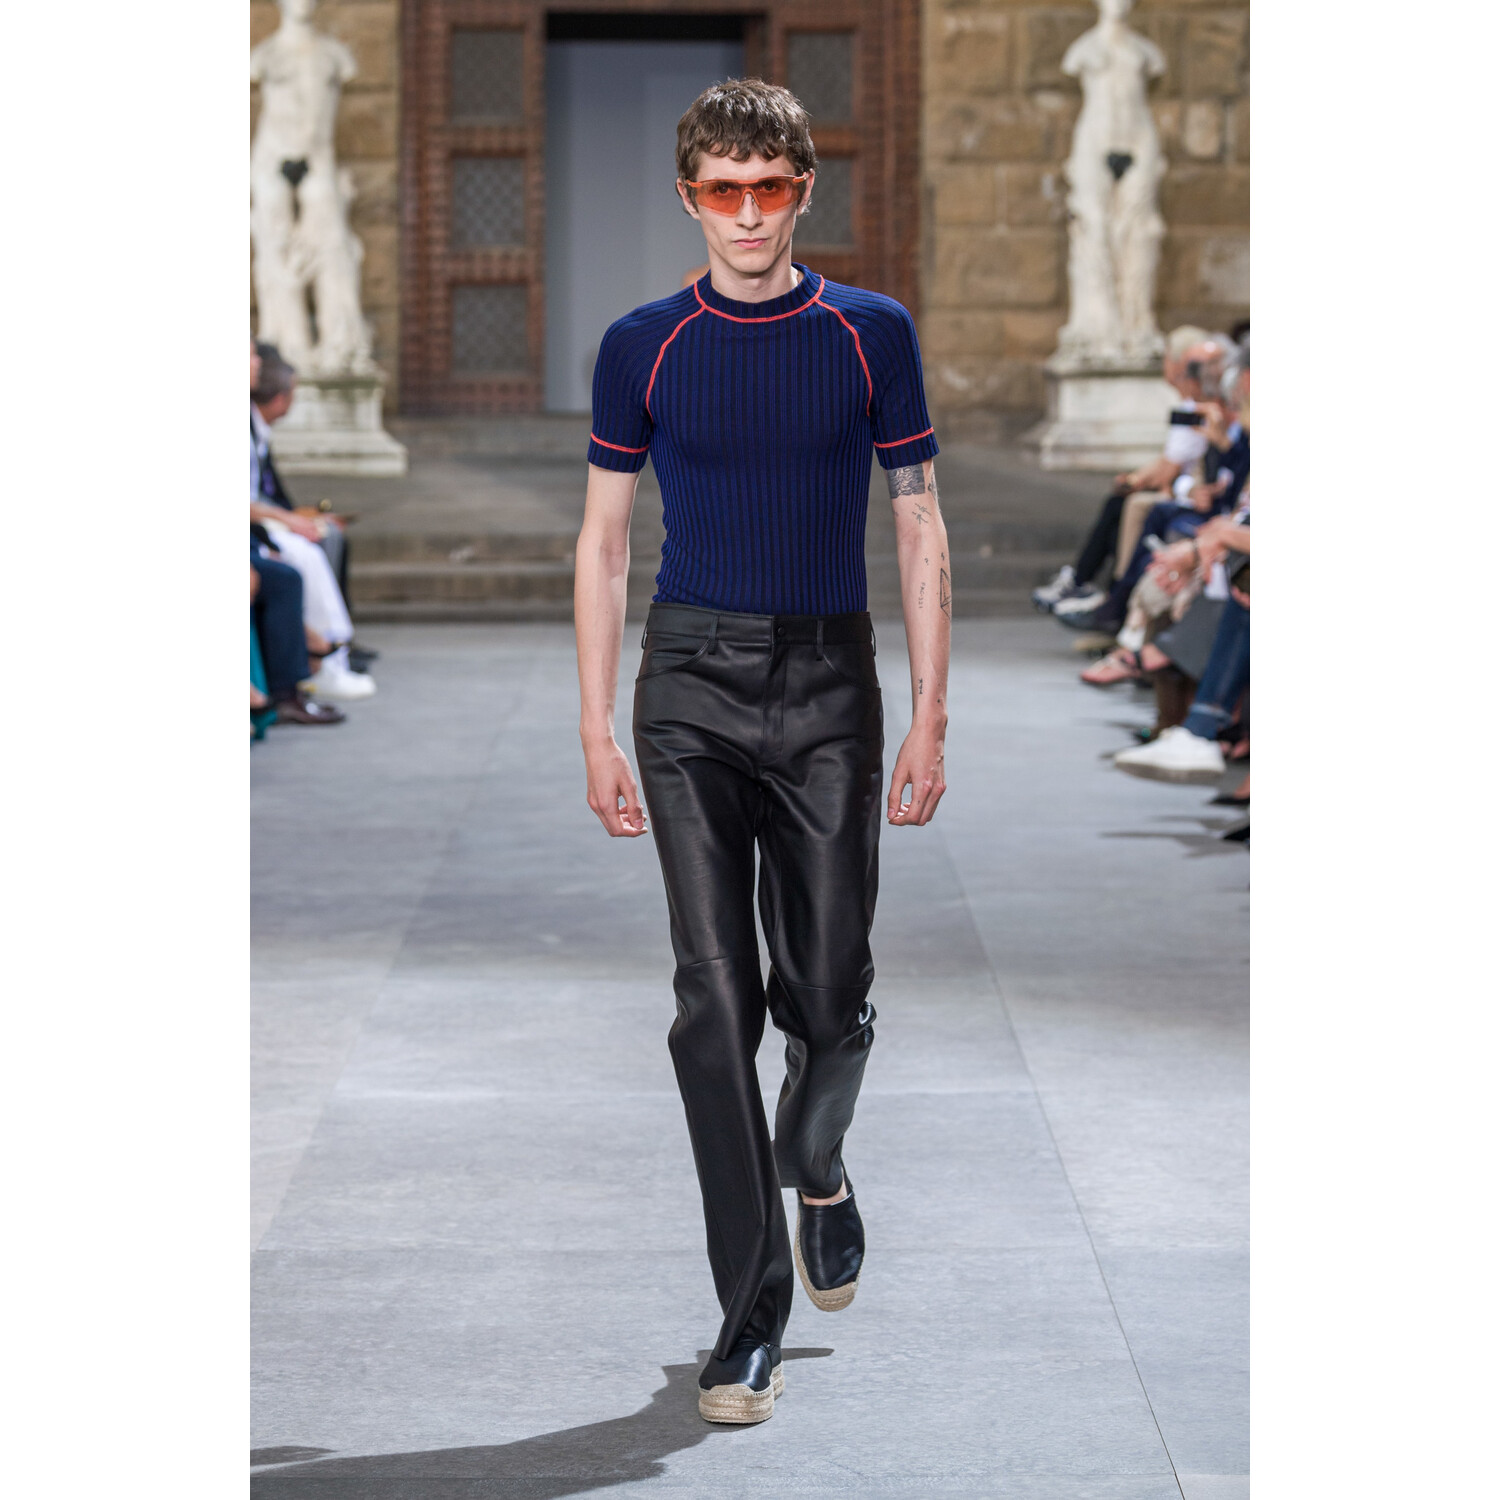 Фото Salvatore Ferragamo Spring 2020 Menswear Collection / Salvatore Ferragamo весна- лето 2020 / Неделя моды: Pitti Uomo